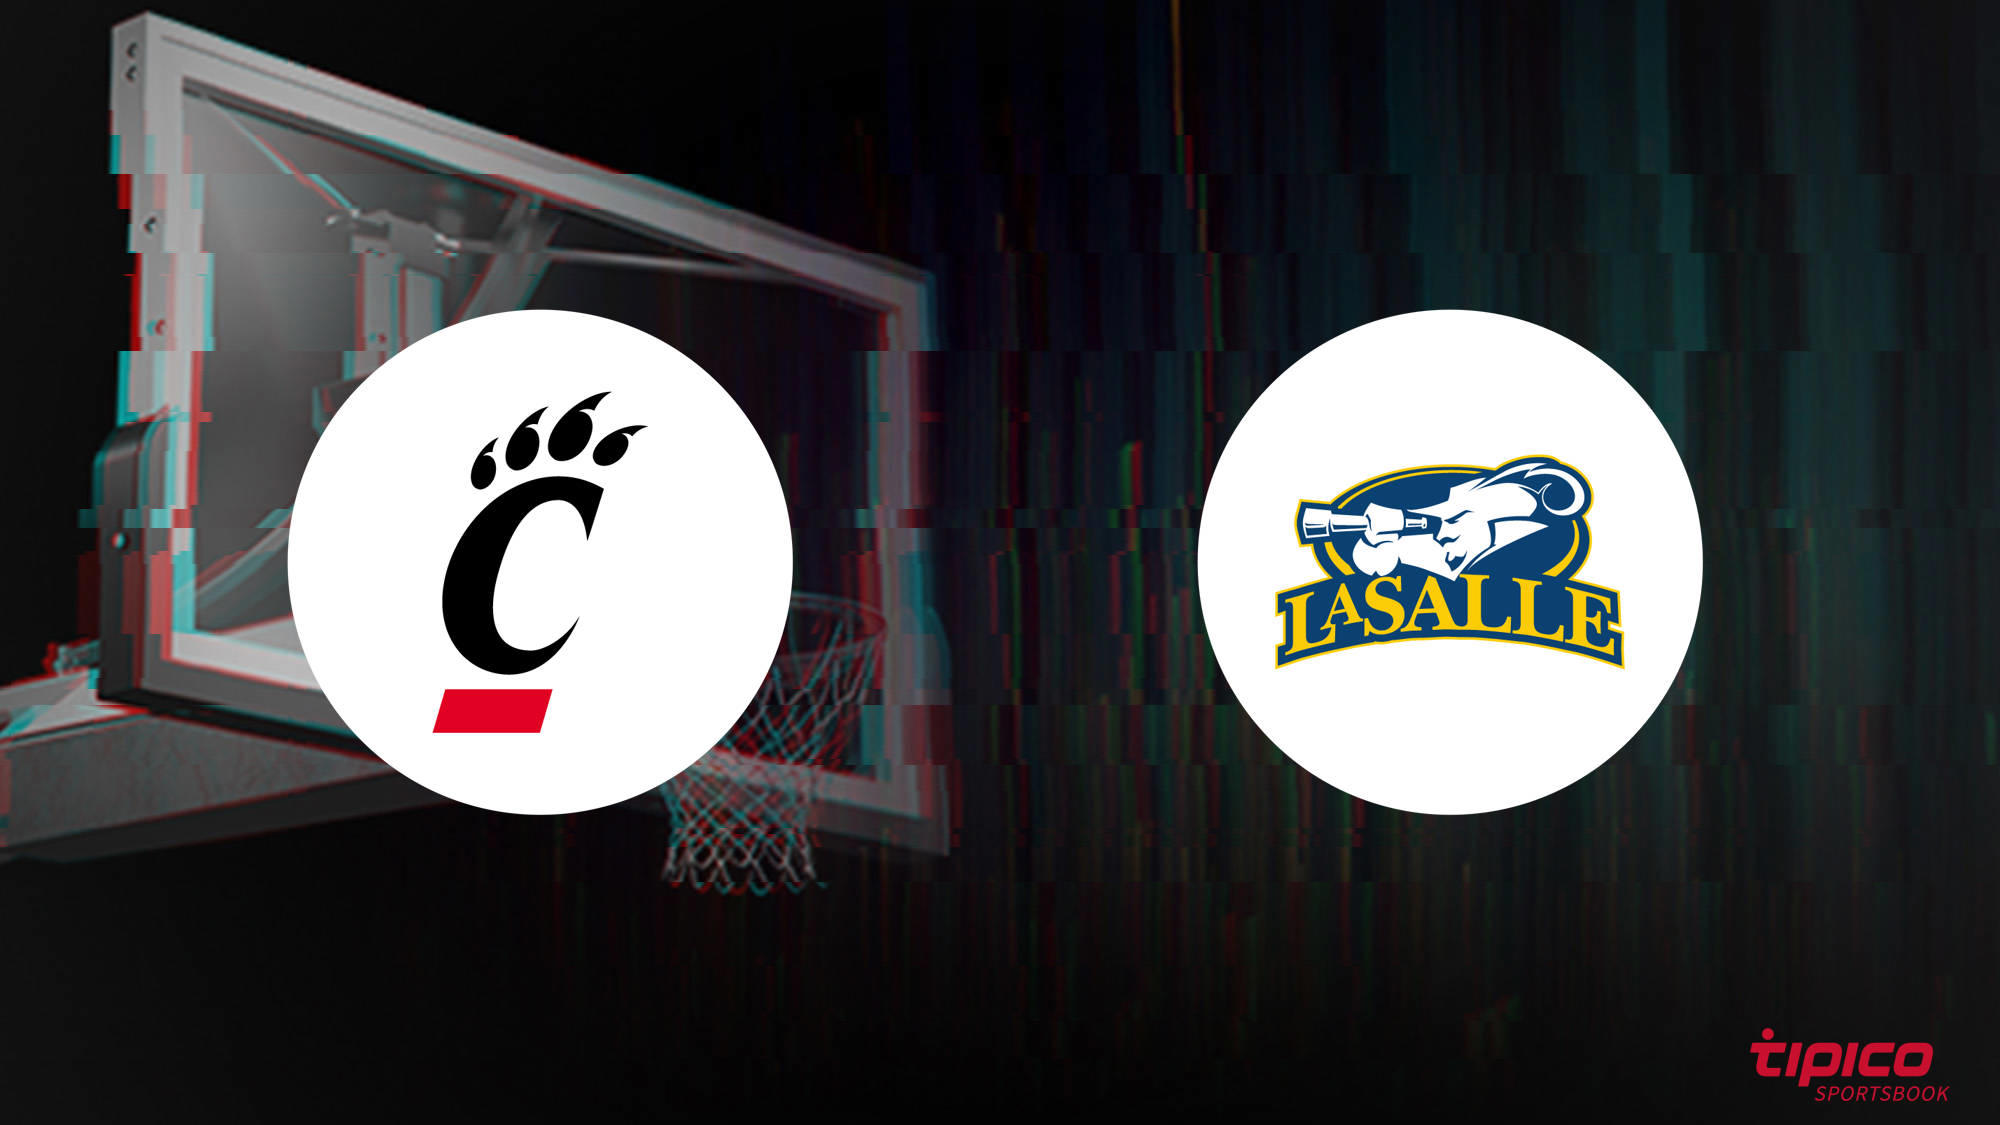 Cincinnati Bearcats vs. La Salle Explorers Preview